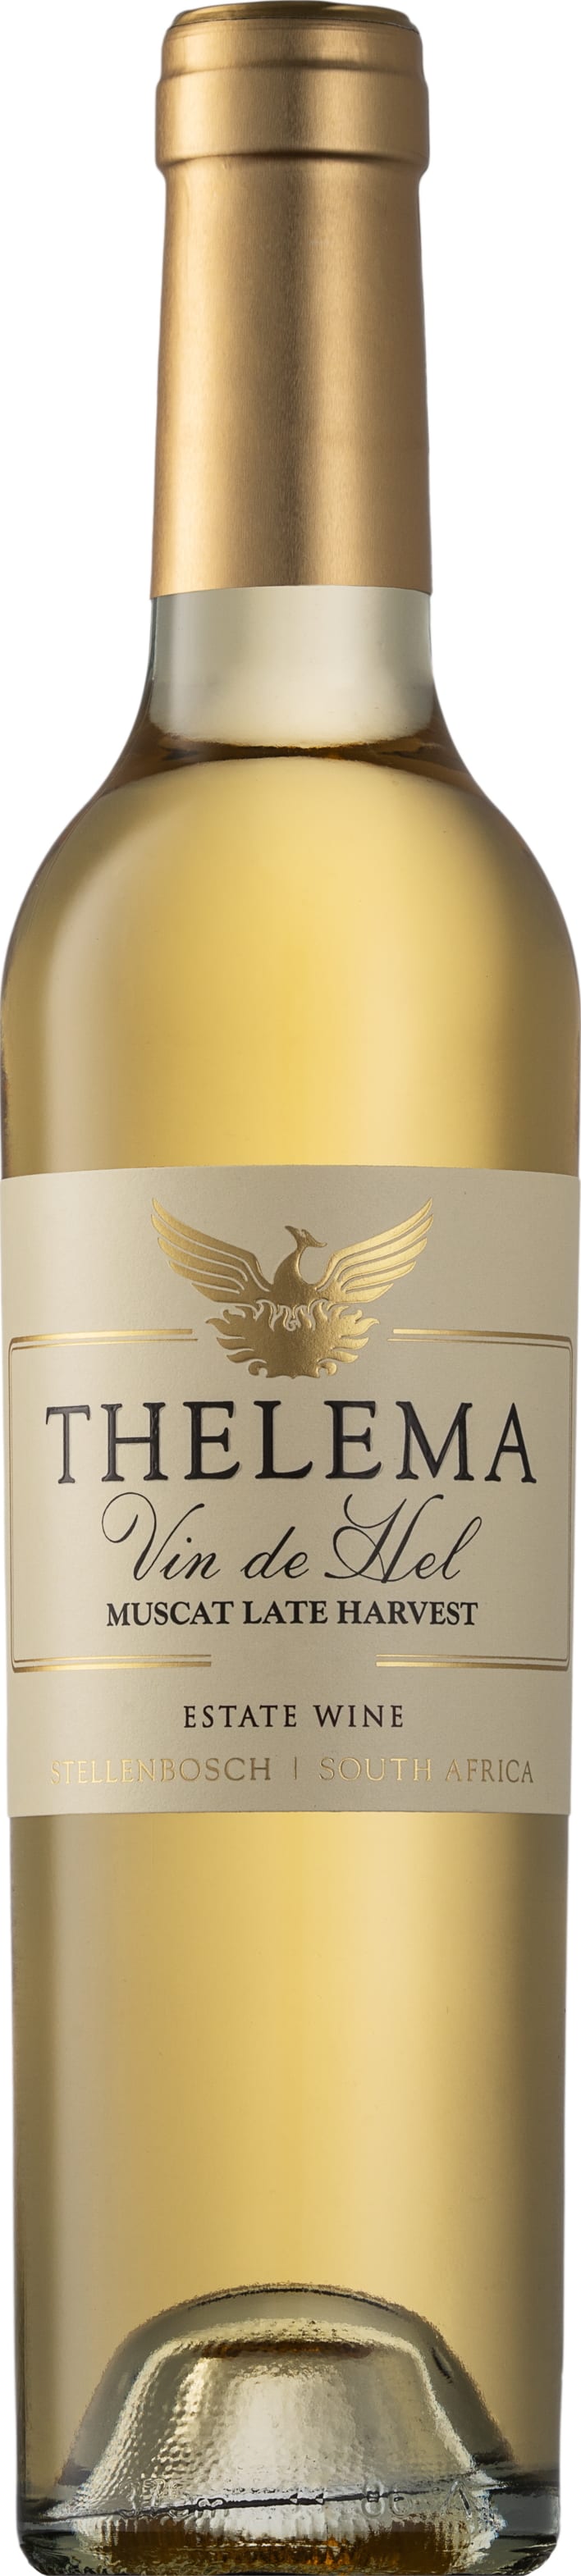 Thelema Mountain Vineyards Vin De Hel Dessert Muscat 375cl 2021 37.5cl - Buy Thelema Mountain Vineyards Wines from GREAT WINES DIRECT wine shop